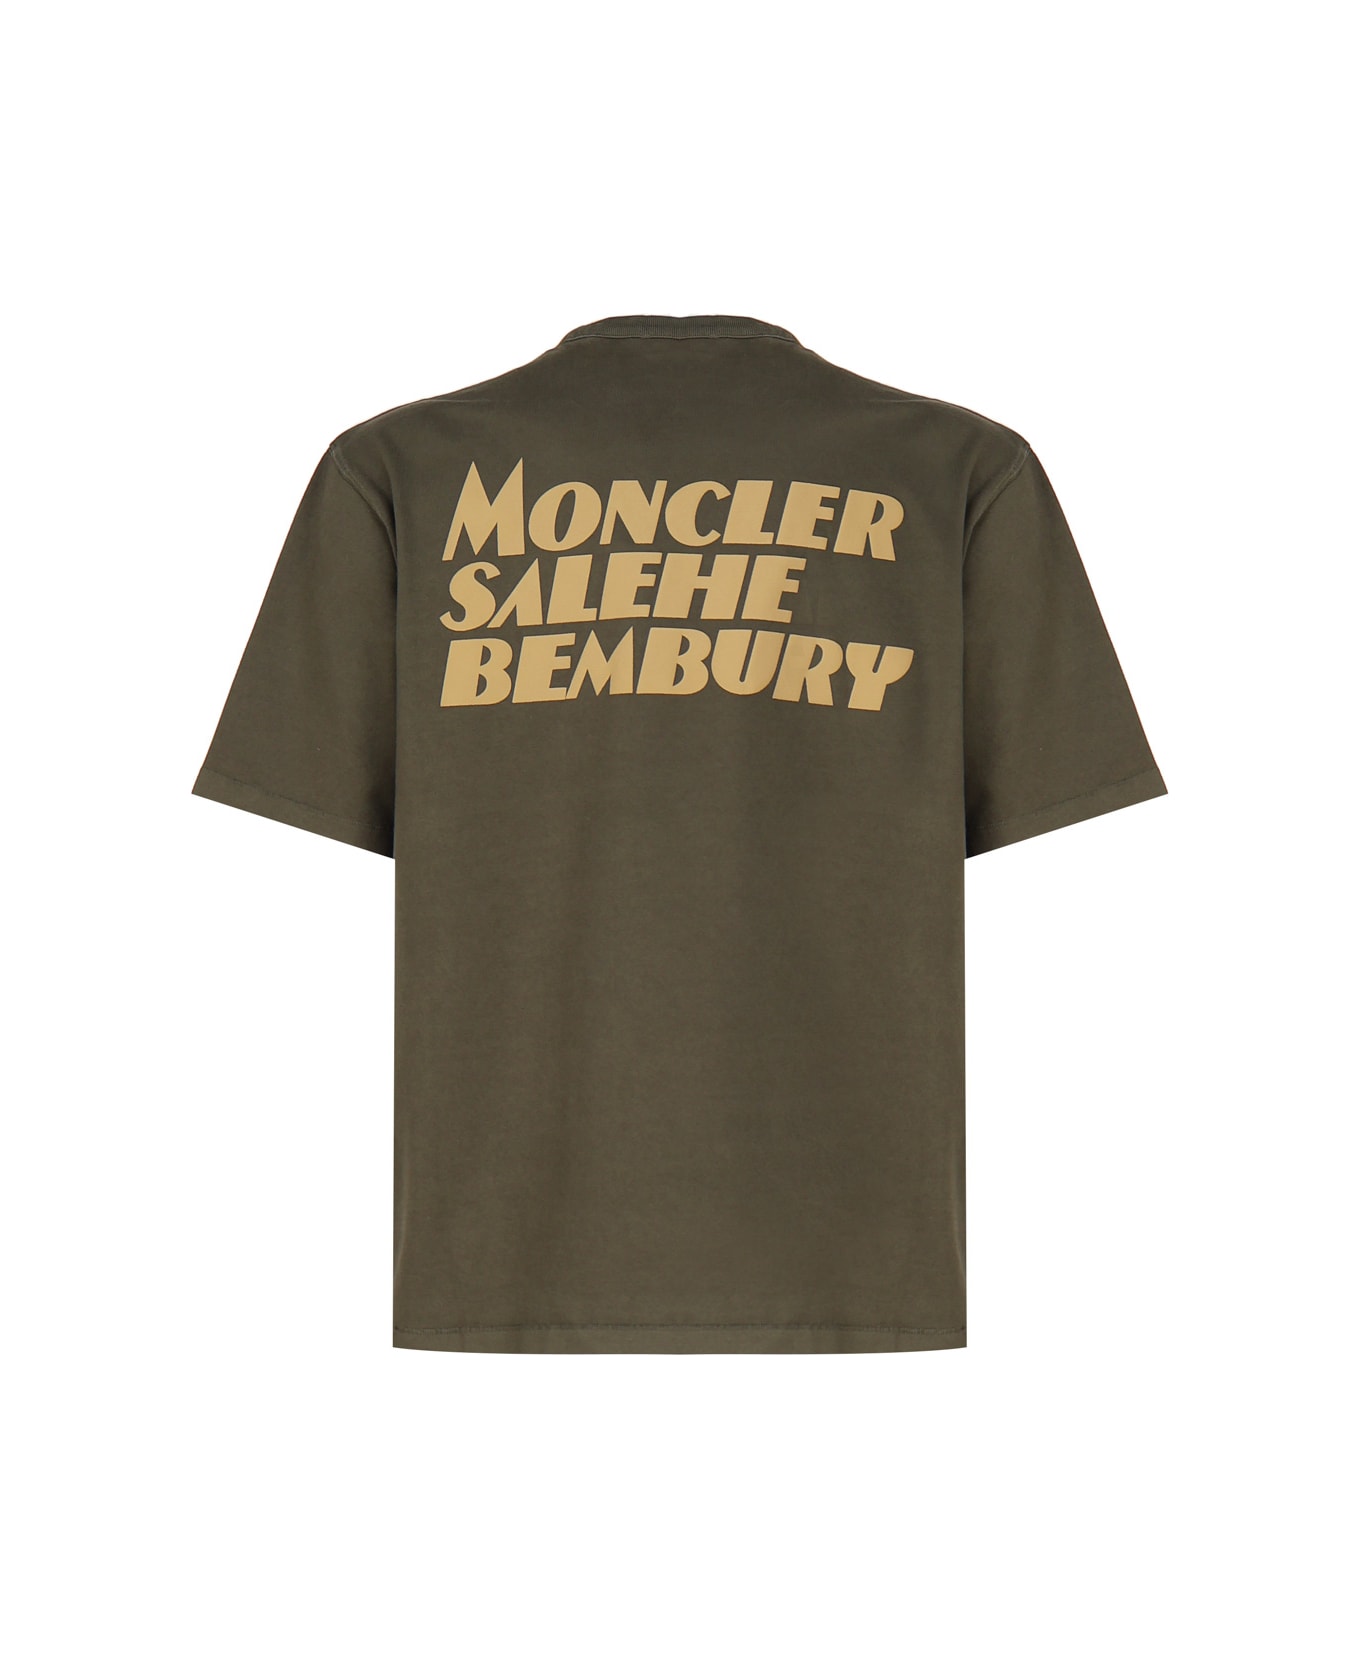 Moncler Genius Moncler X Salehe Bembury T-shirt - Green